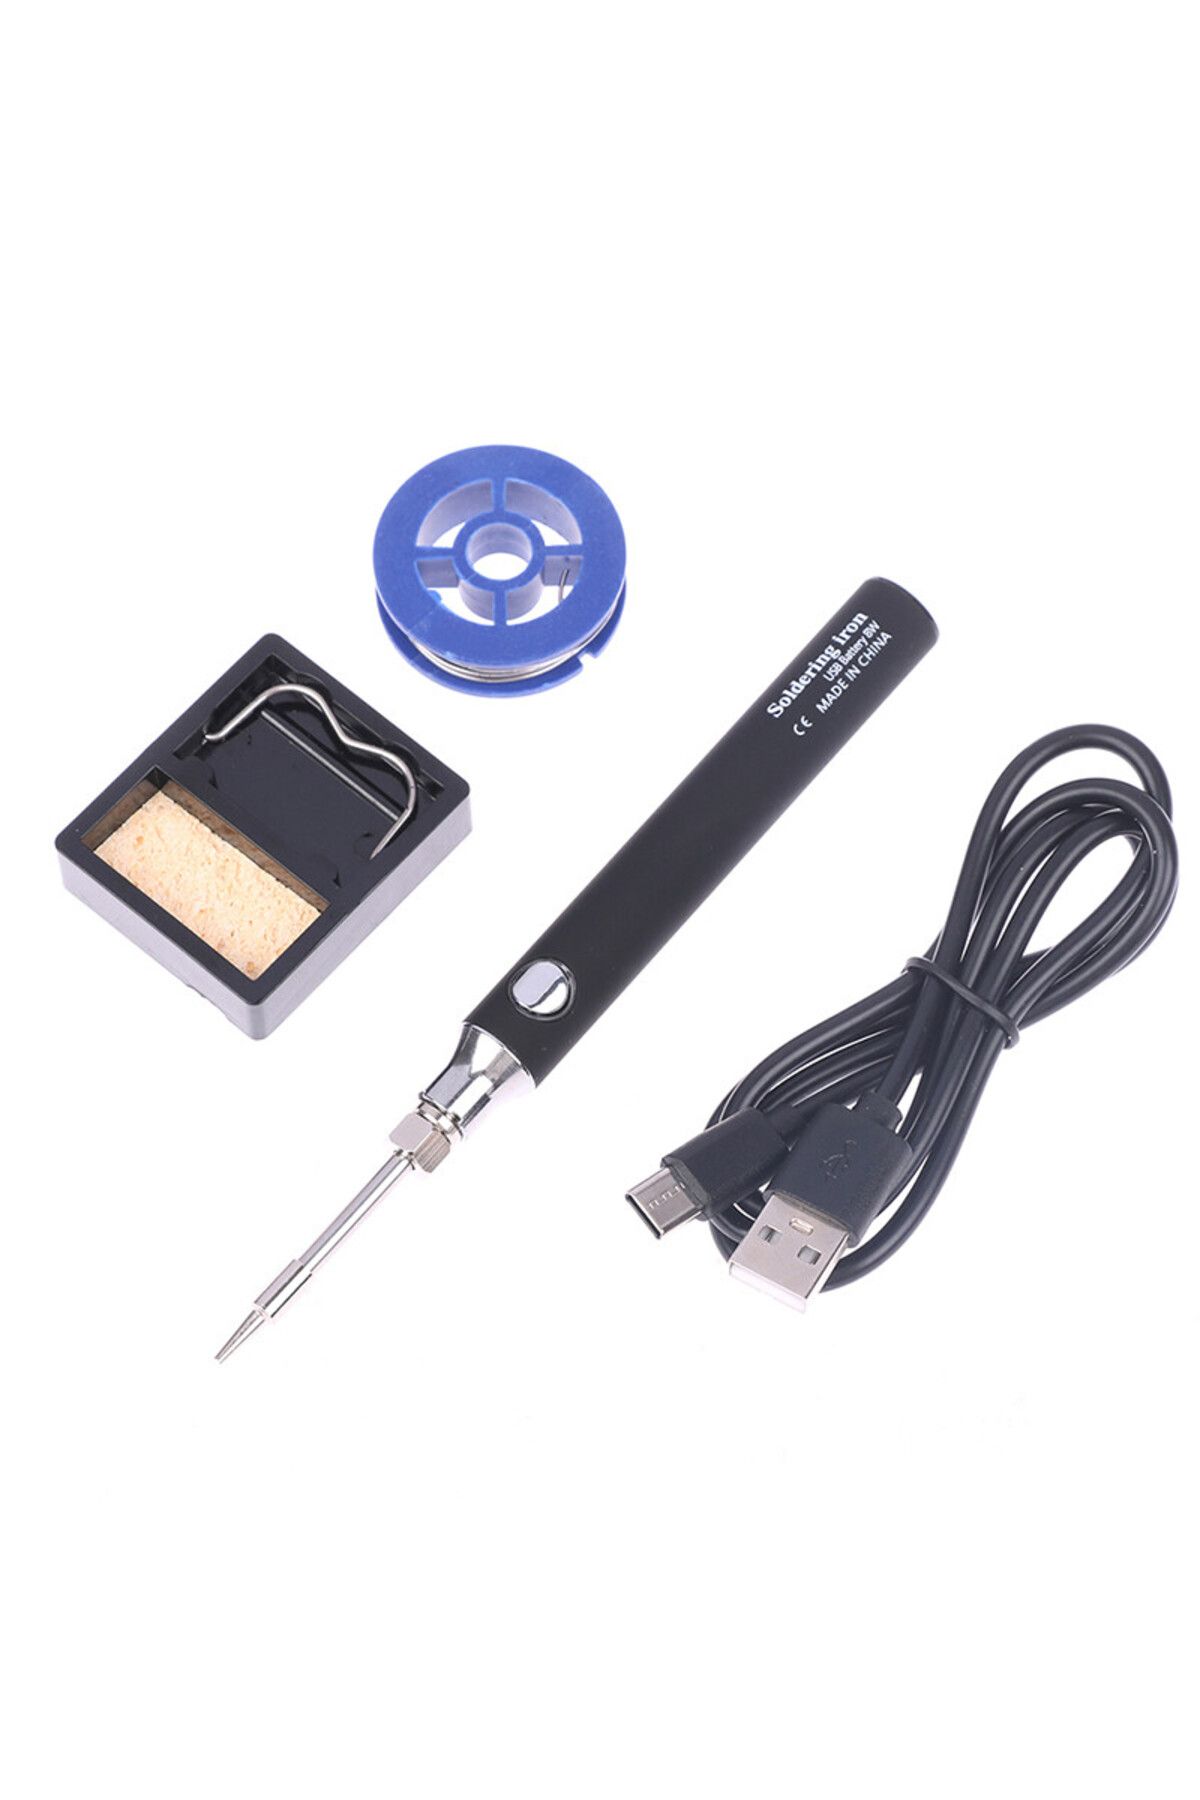 Motorobit USB 5V 8W USB Siyah Kalem Havya Seti - Sıcaklık Ayarlı Mod Seçimli